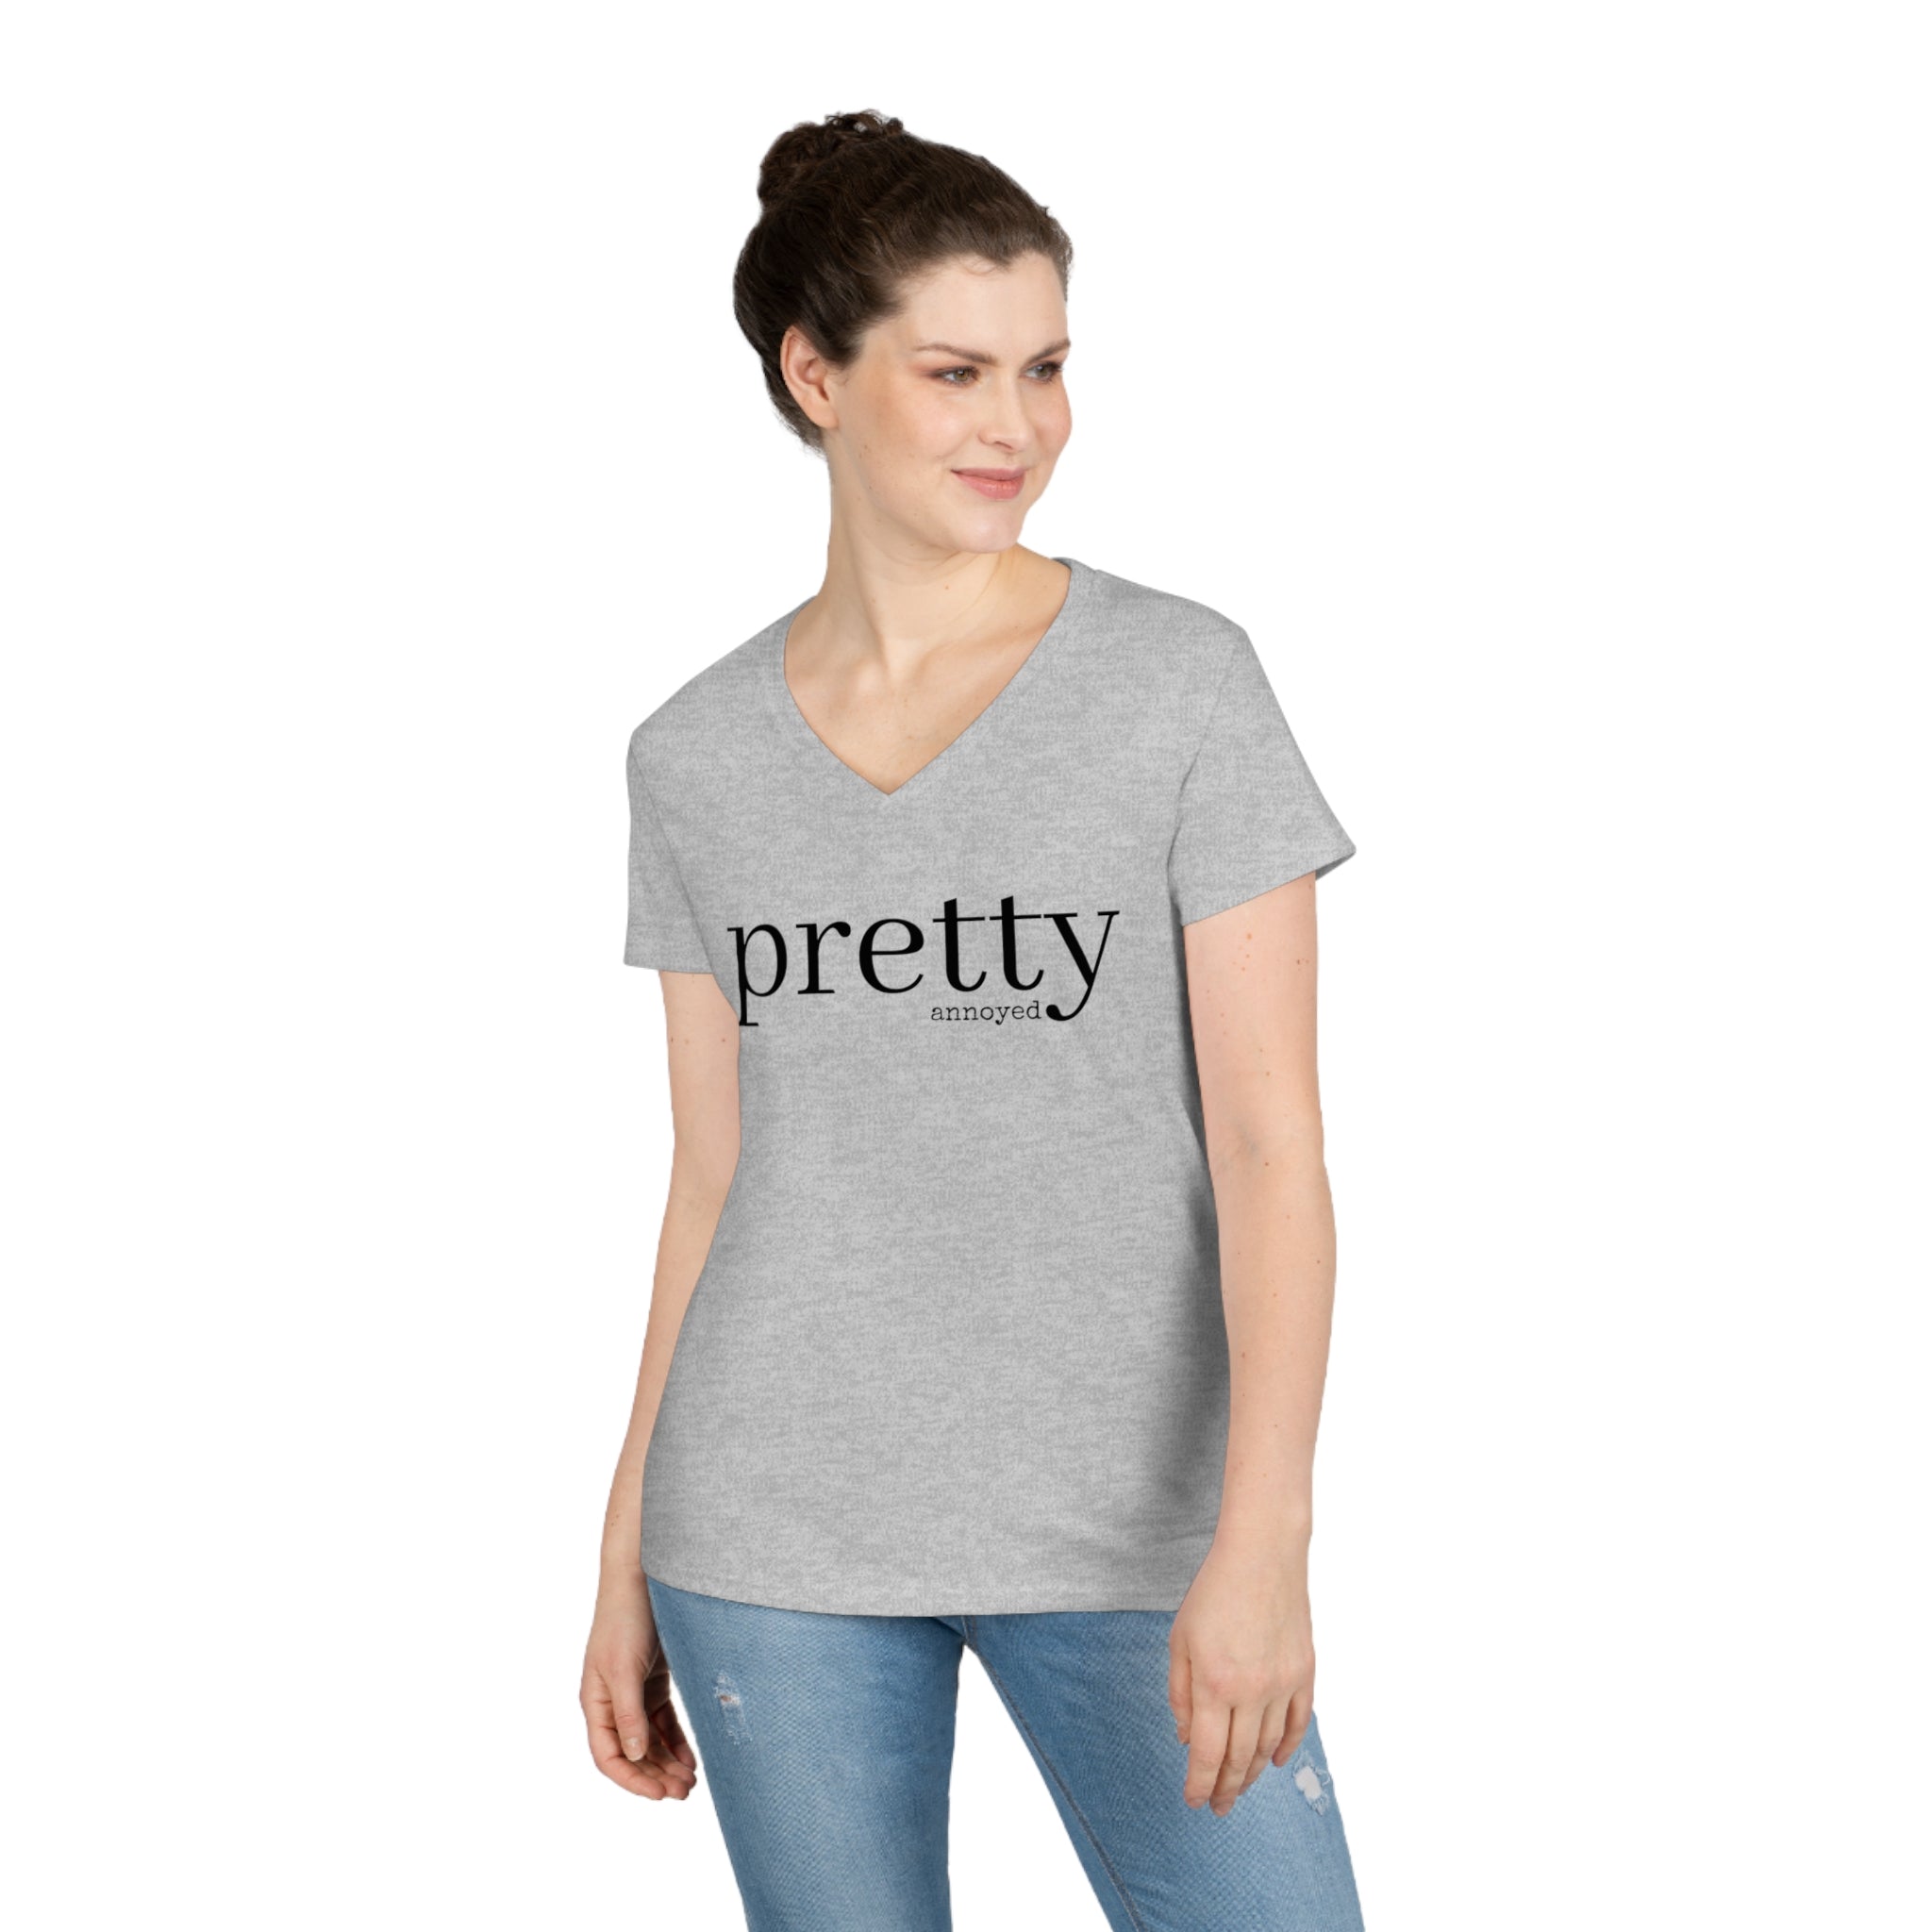 PRETTY annoyed Women's V Neck T-shirt, Cute Graphic Tee